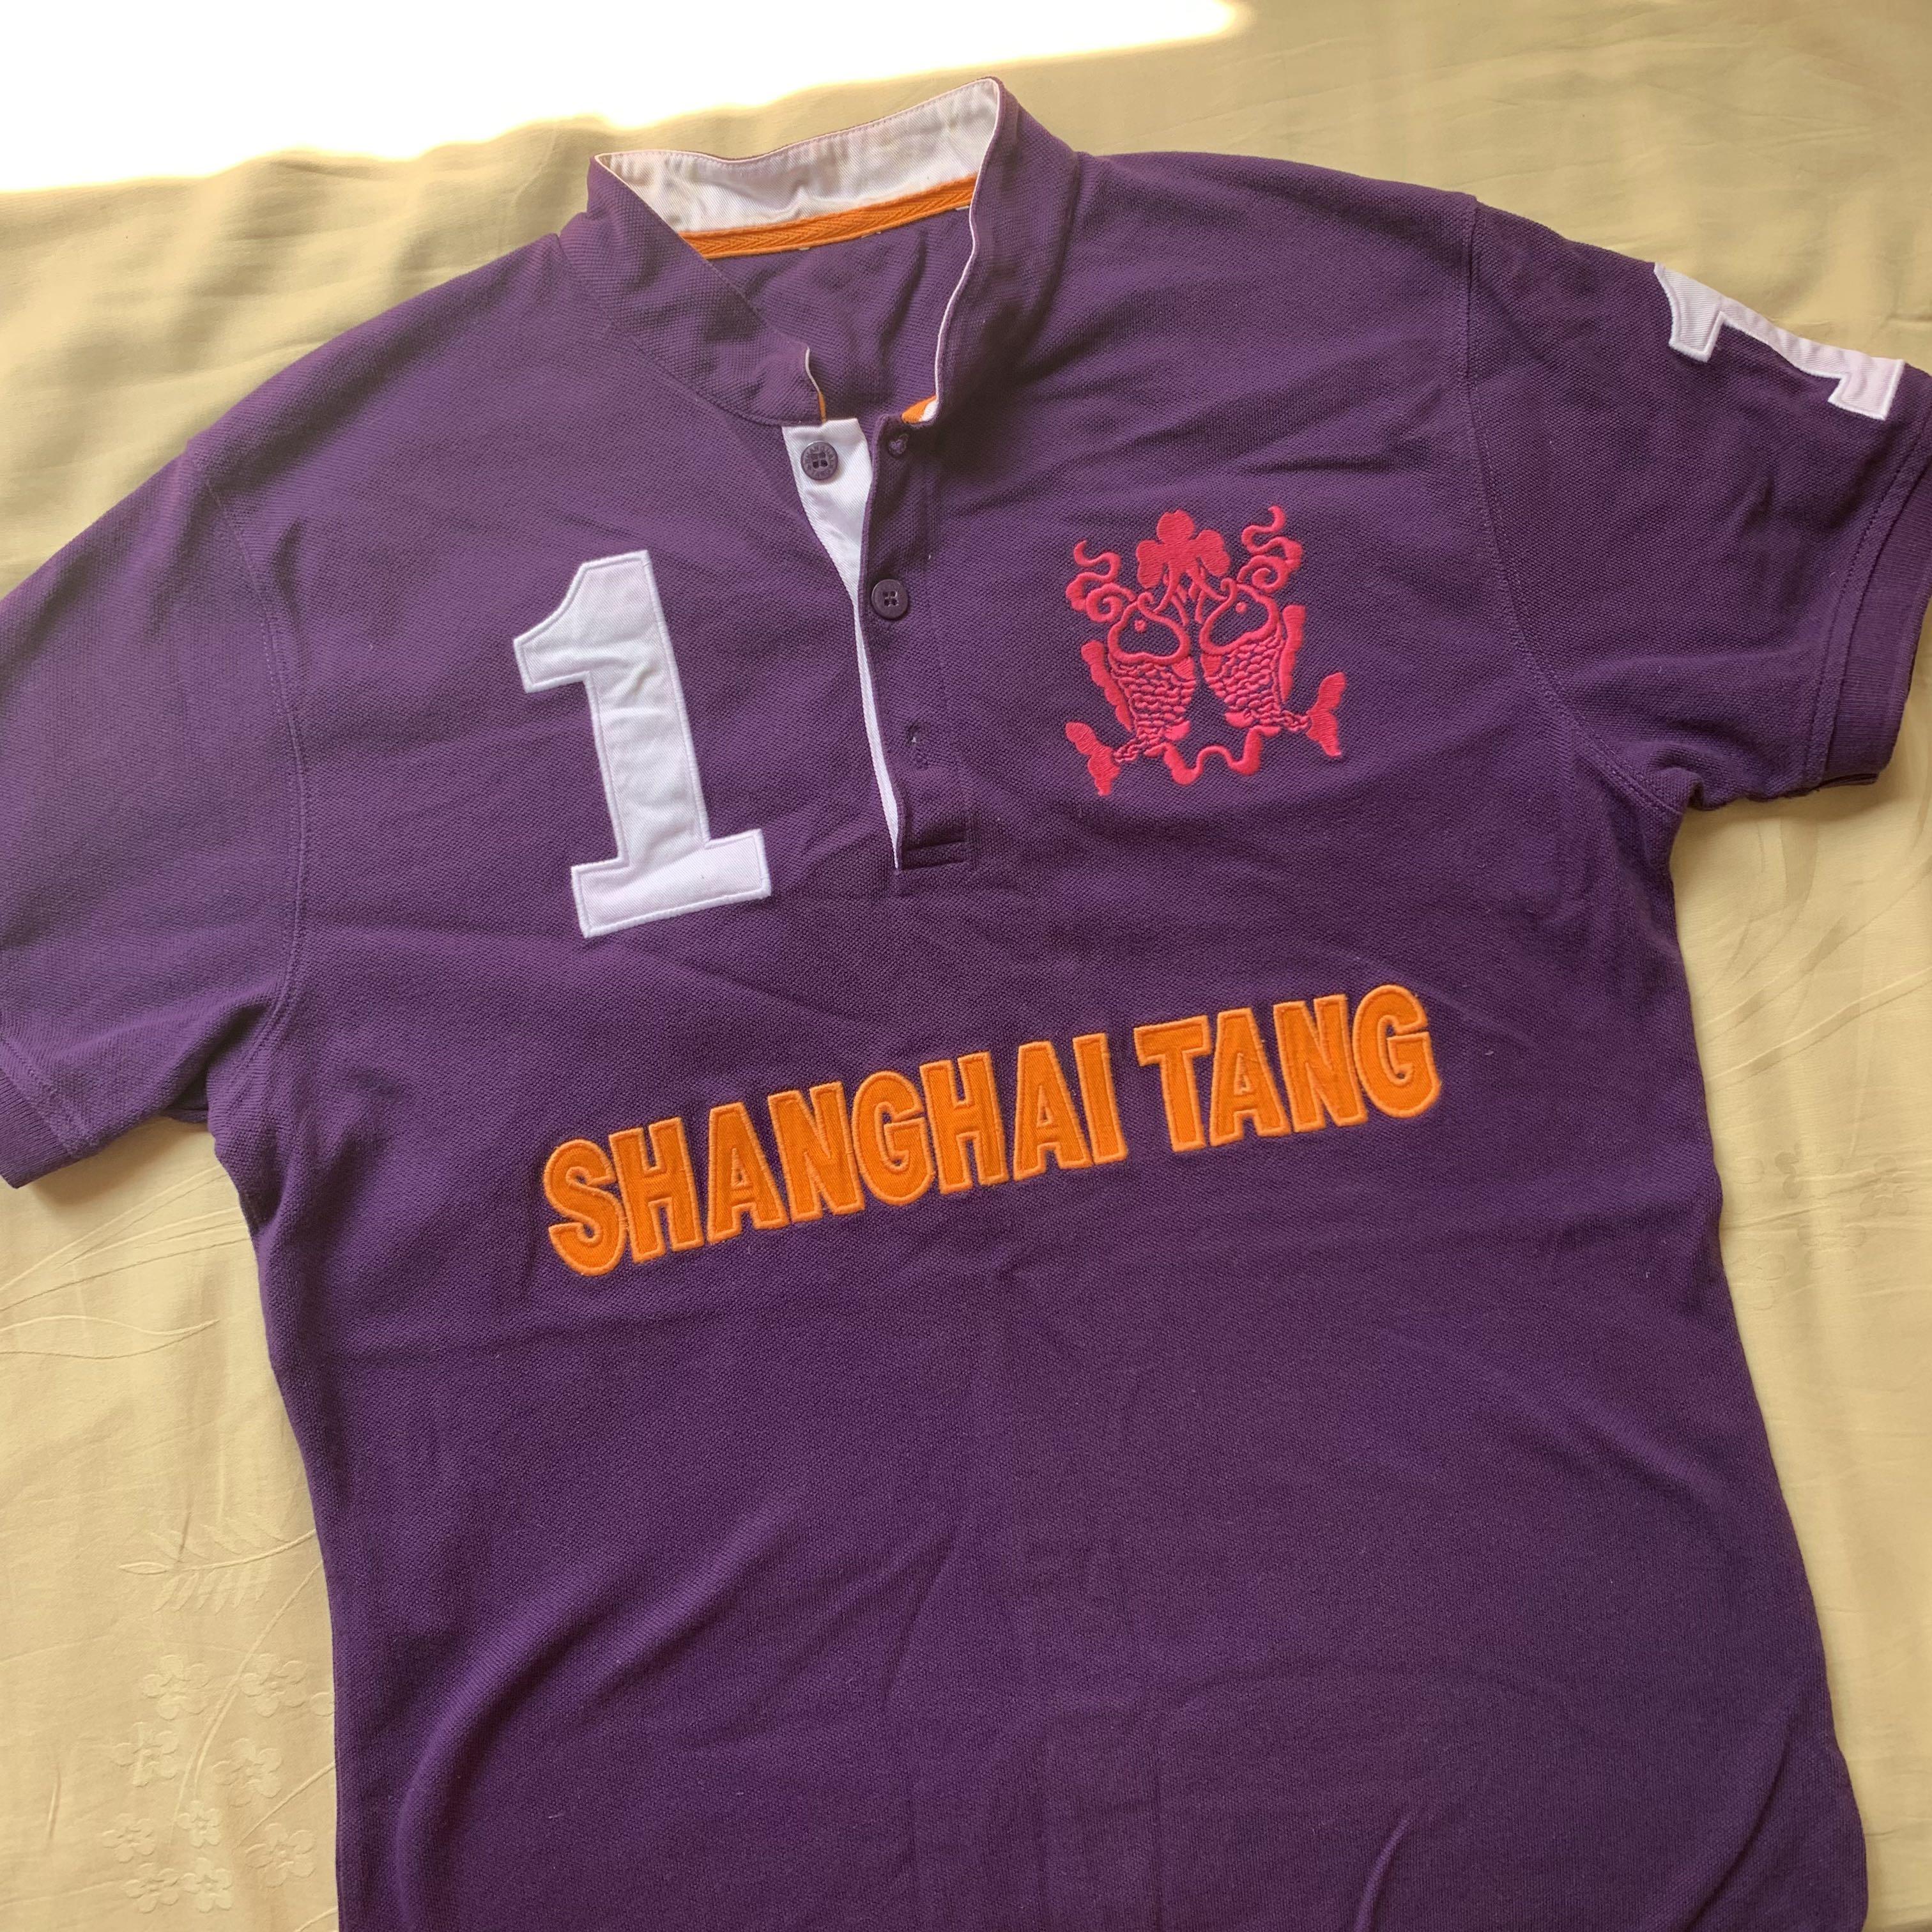 Kleding Dameskleding Tops & T-shirts Polos SHANGHAI TANG Vintage Polo Maat M 